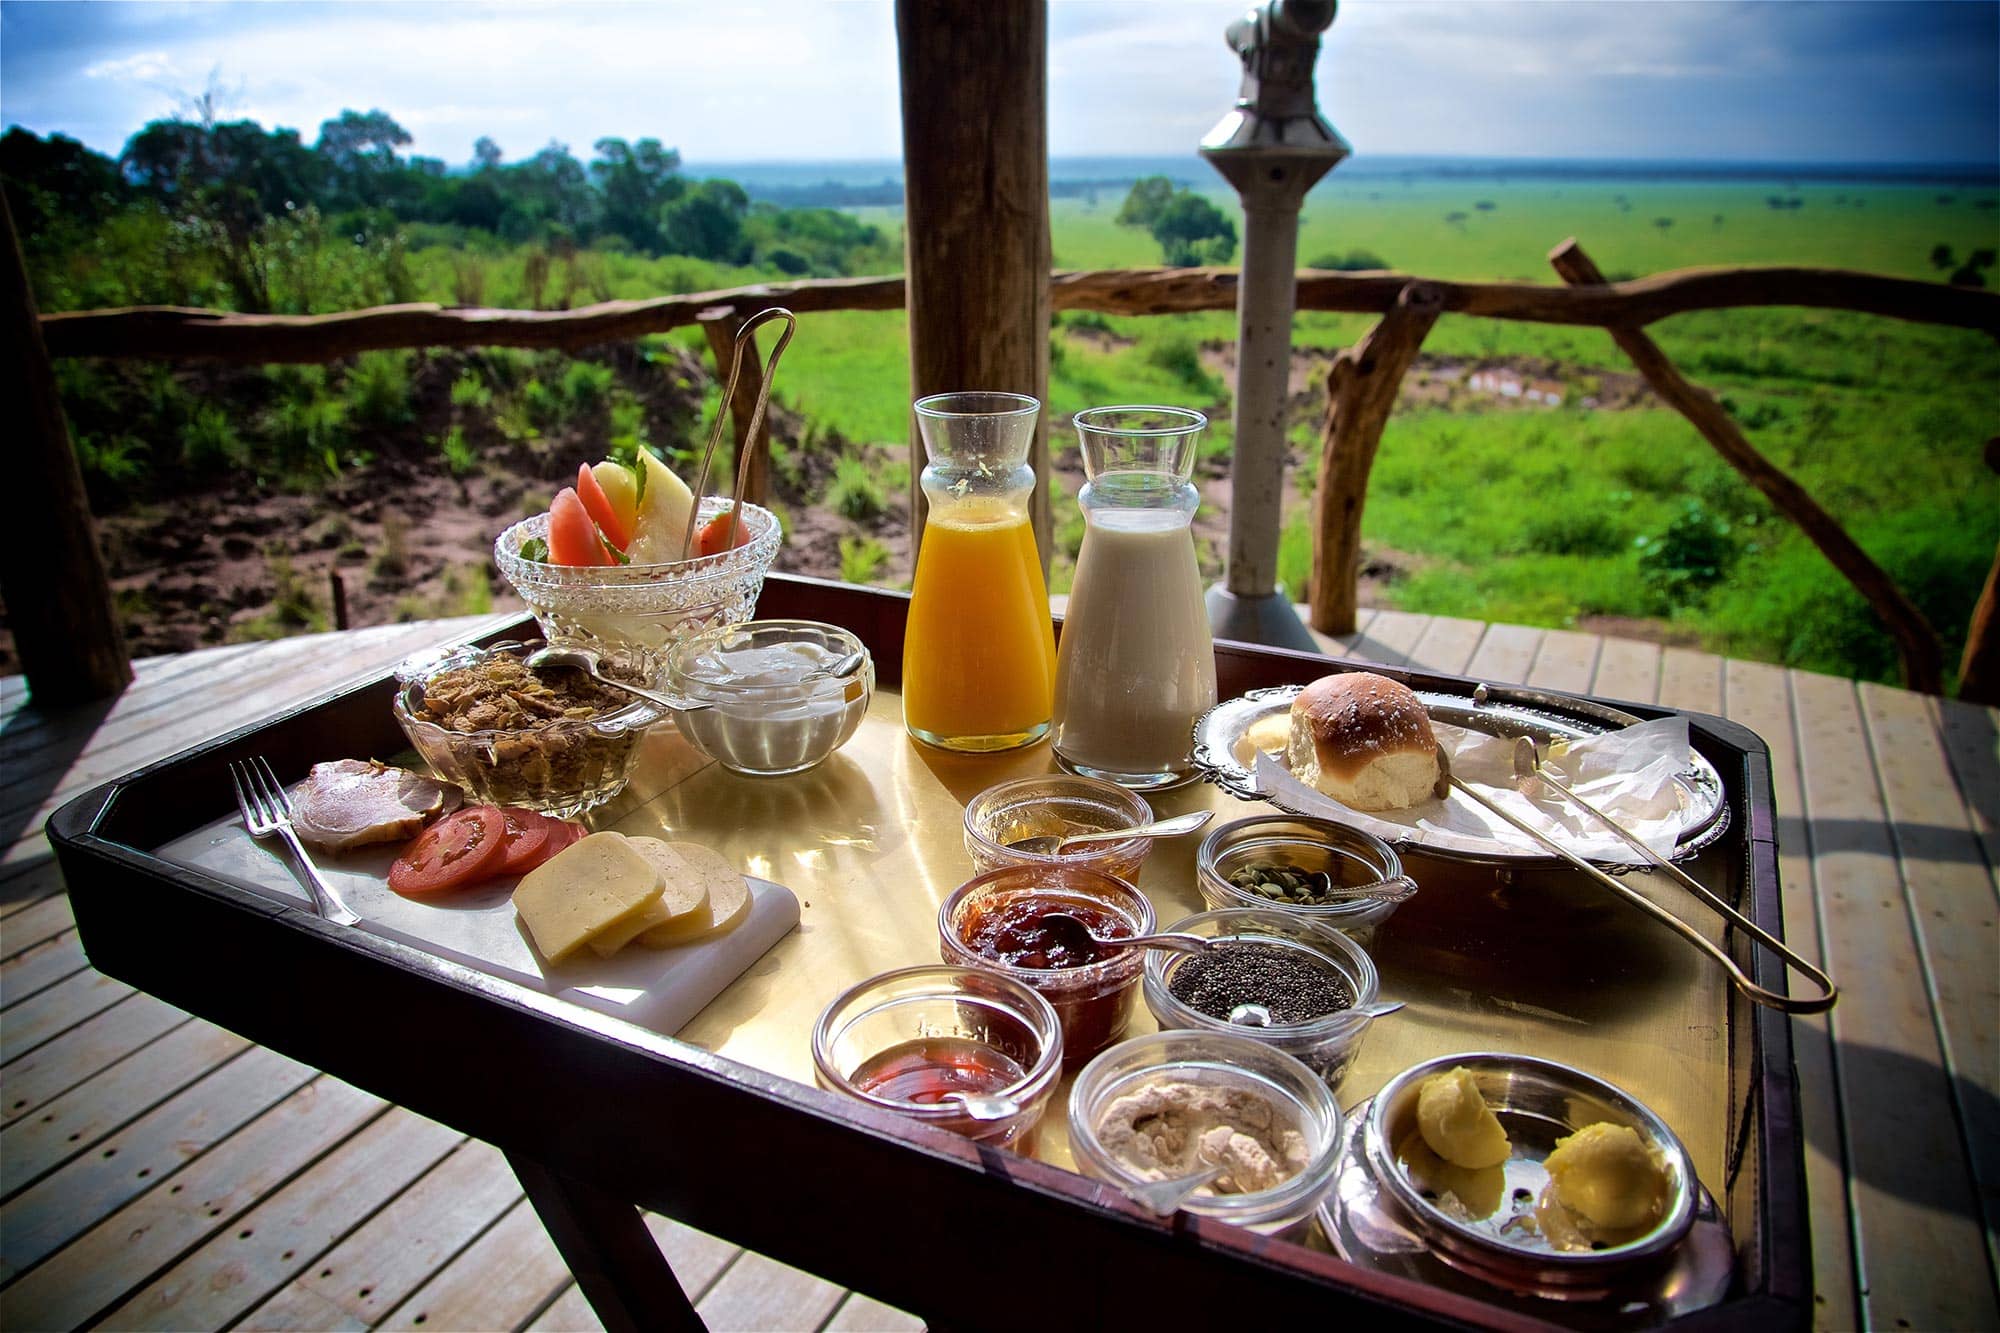 A tray chocked full of Tanzanian breakfast food